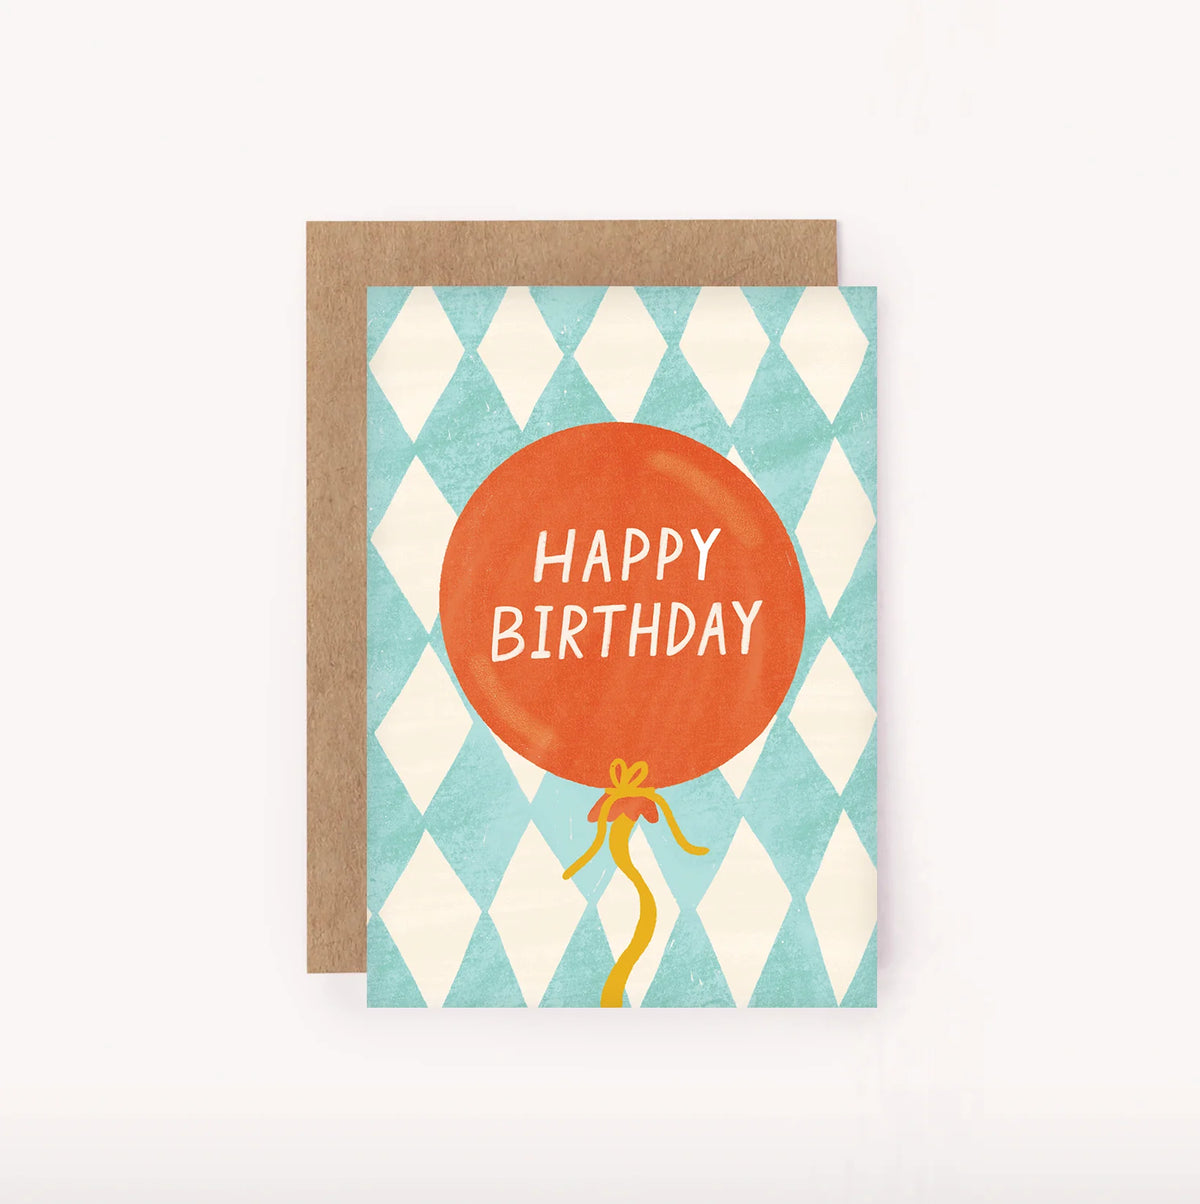 lauren sissons mini birthday card - balloon